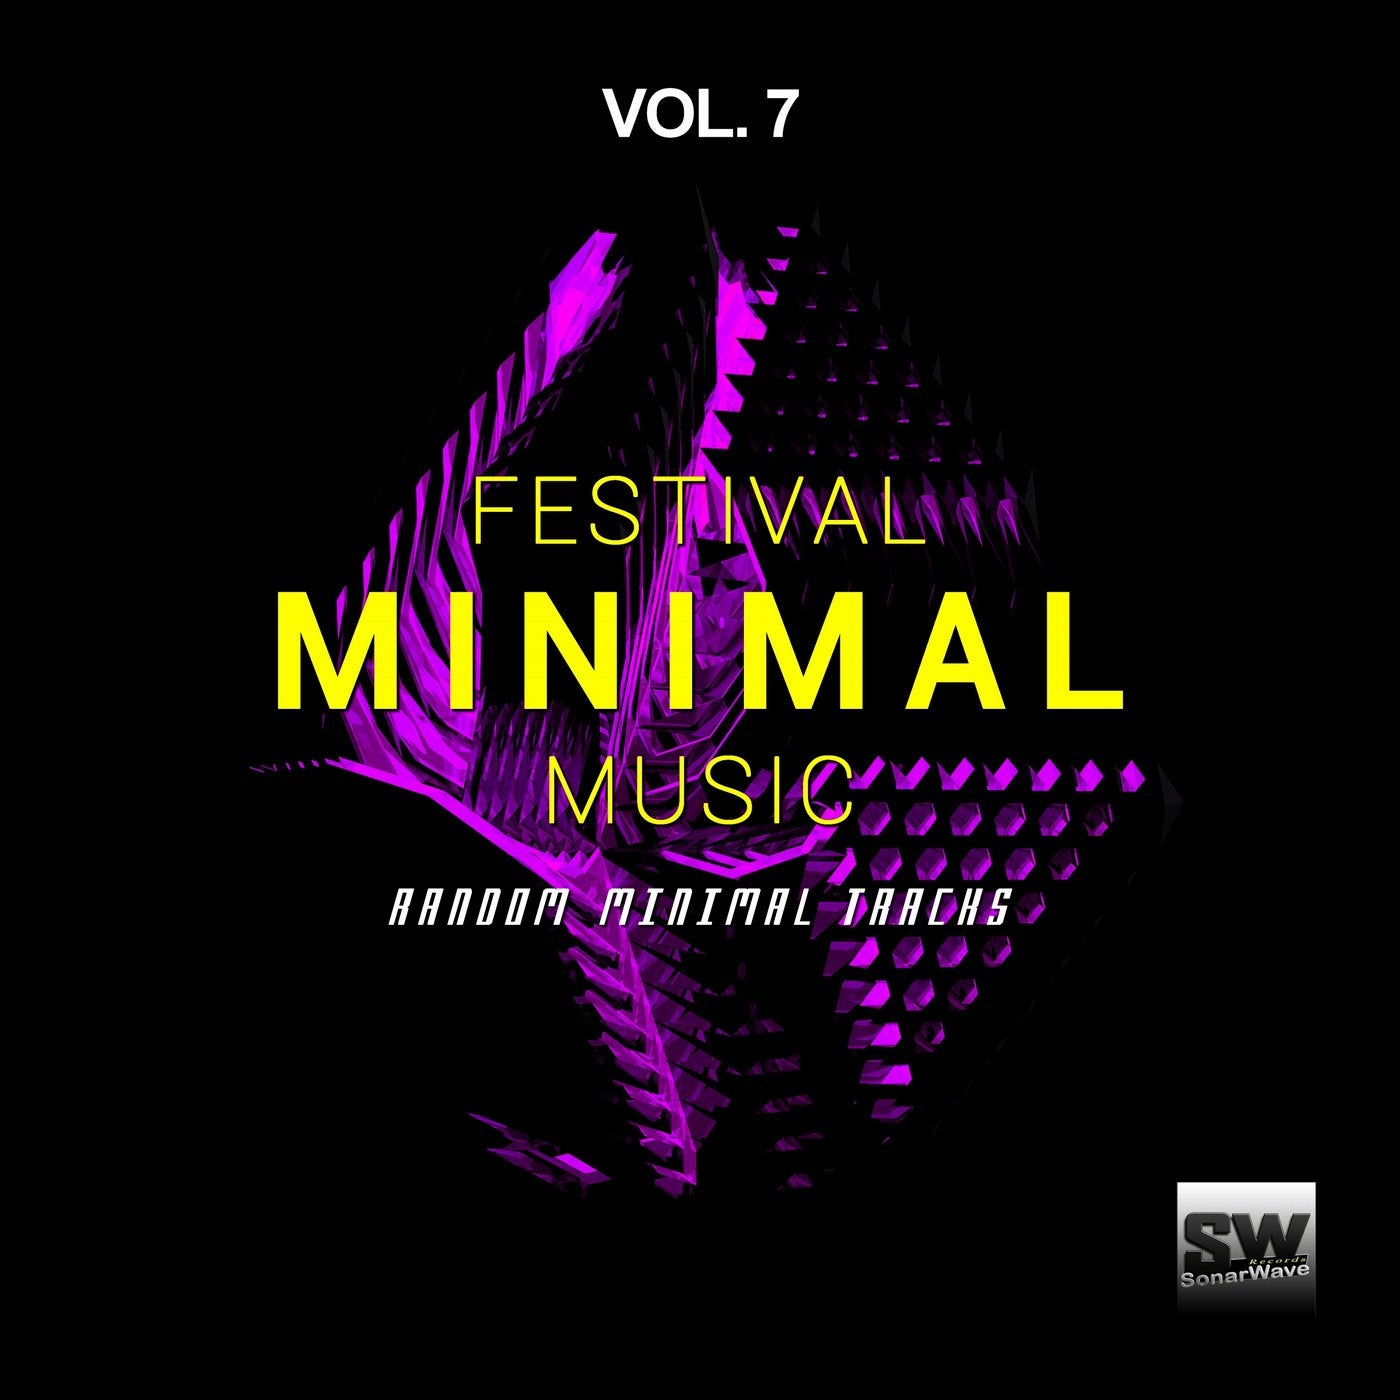 Festival Minimal Music, Vol. 7 (Random Minimal Tracks)